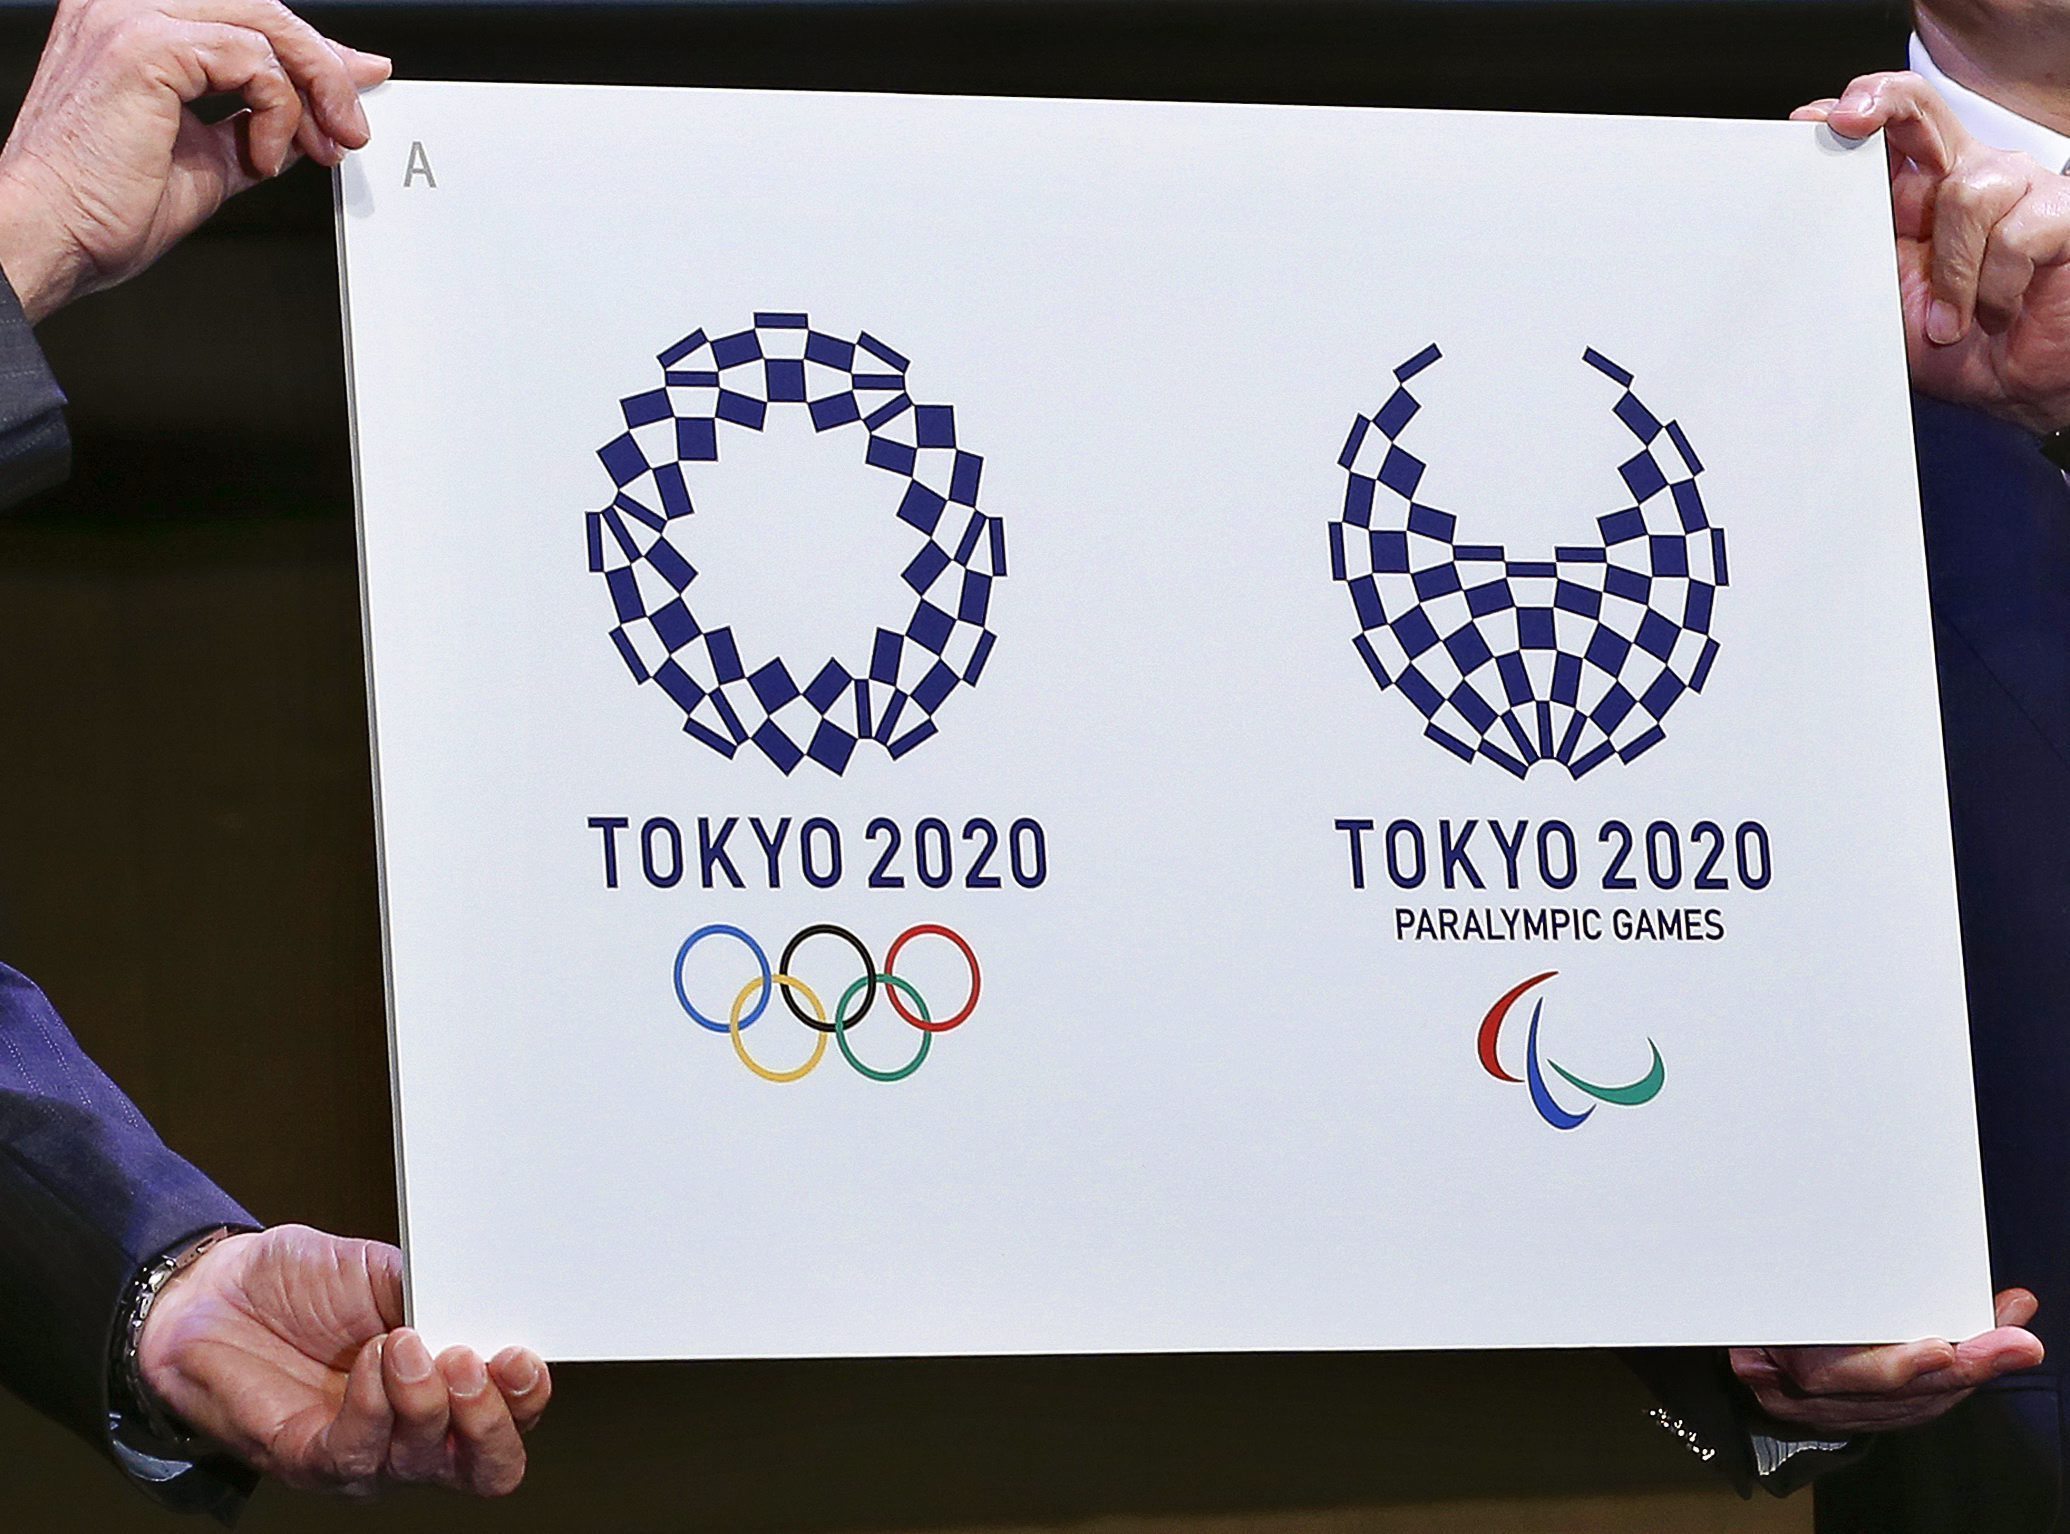 Tokio 2020 afirma que hizo "pagos legítimos" en elección